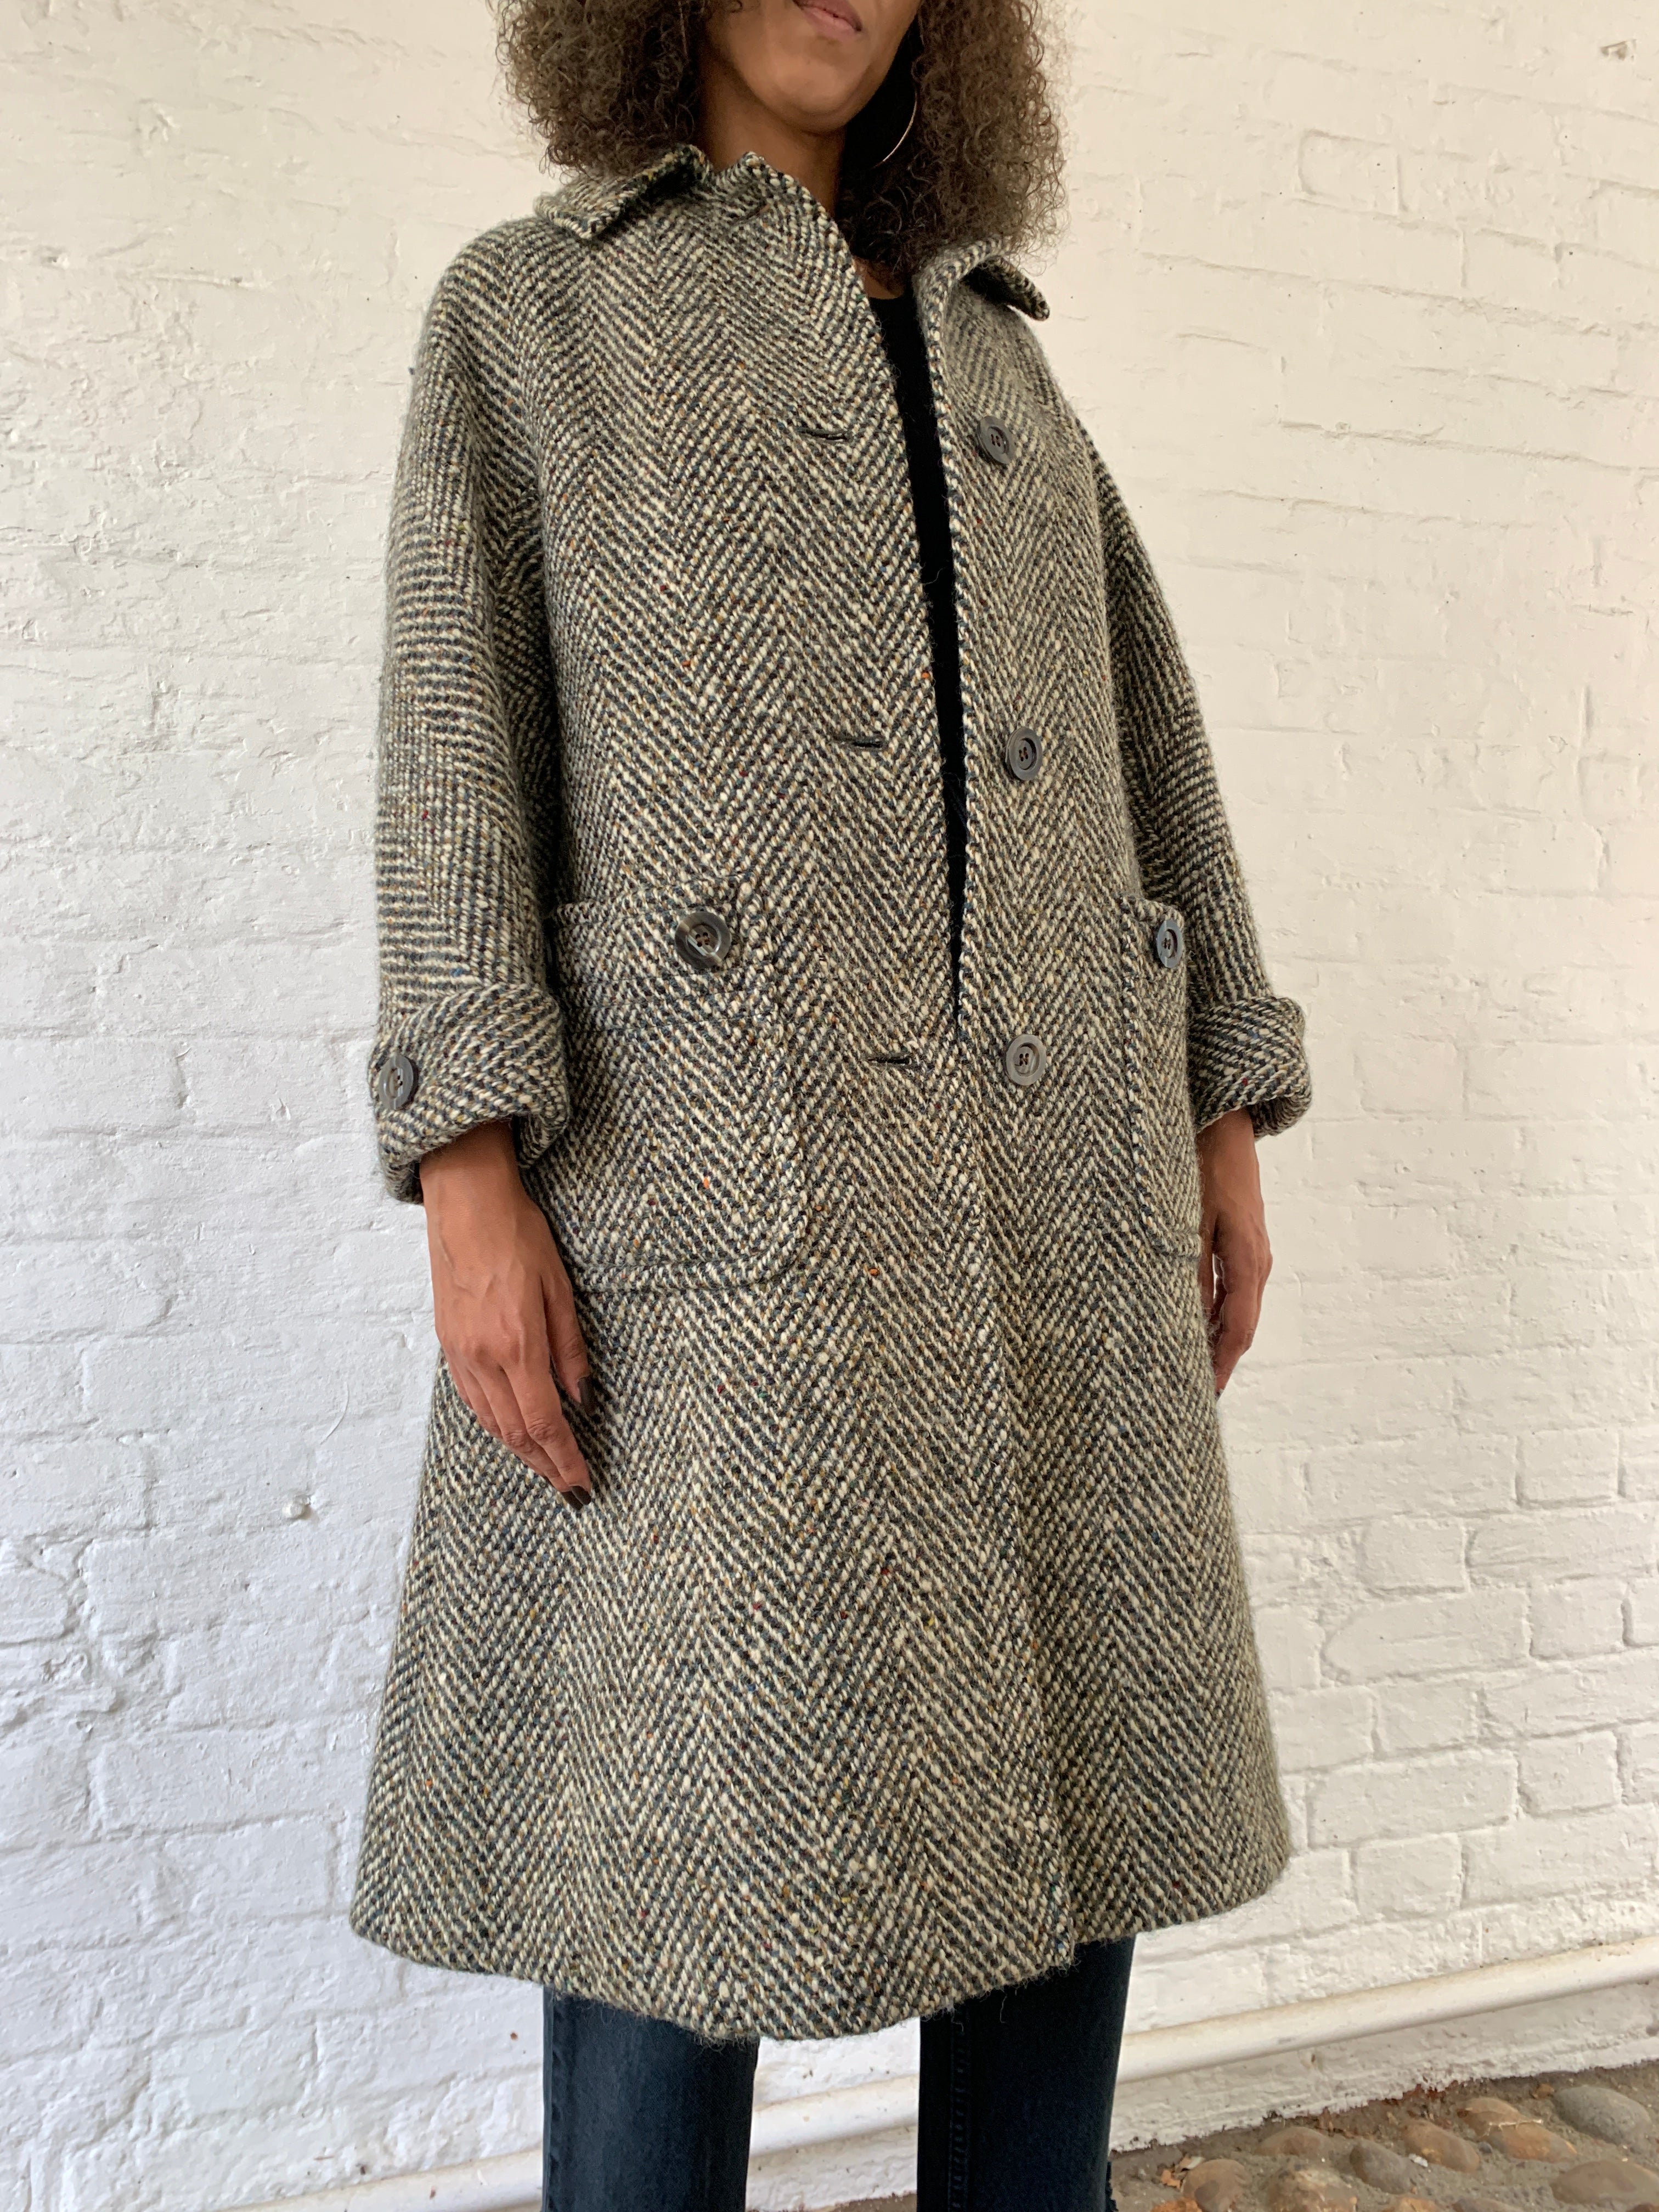 Vintage tweed Aquascutum coat